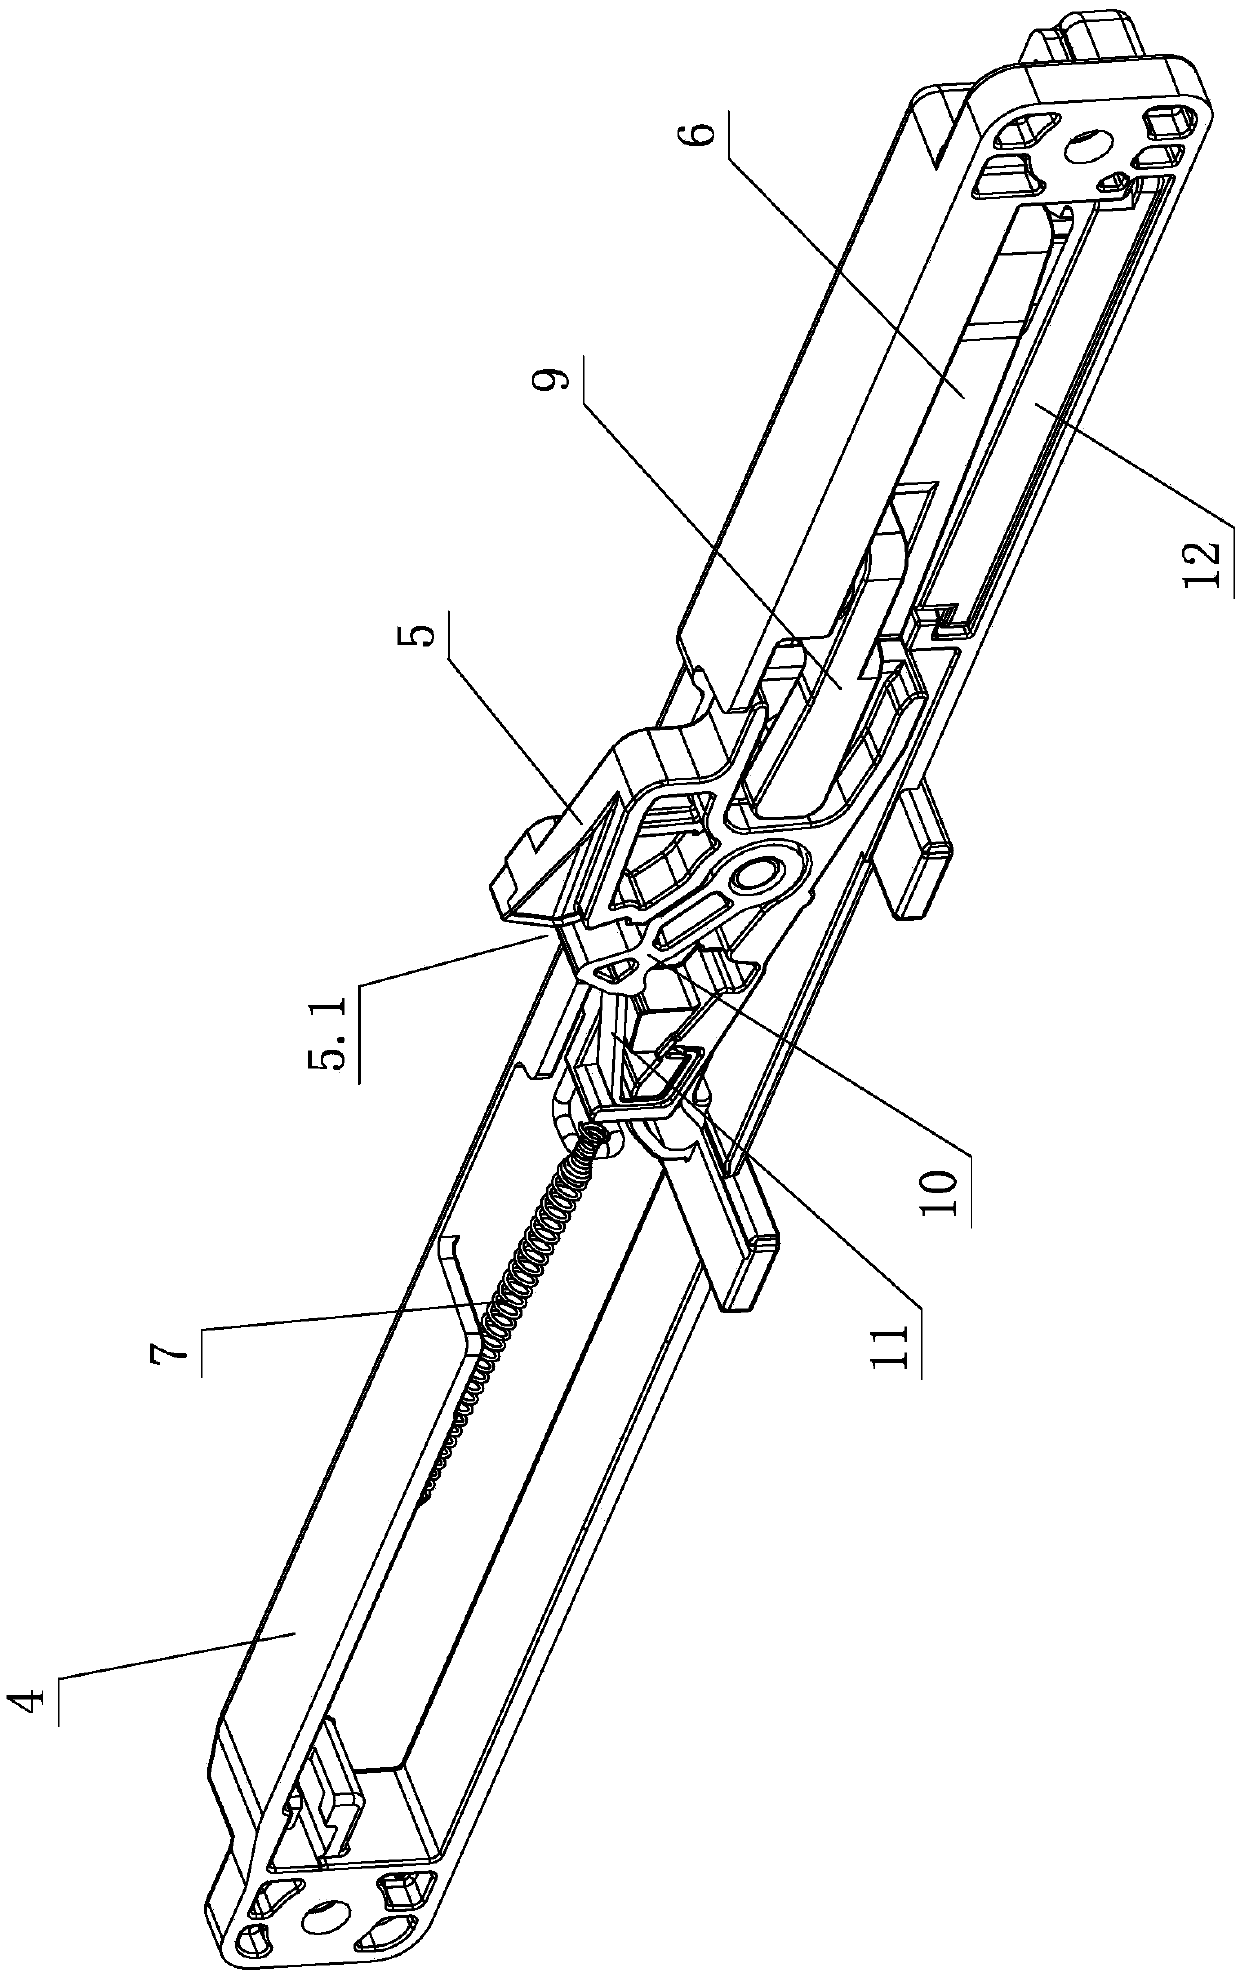 An integrated optimized rebound mechanism for furniture slide rails